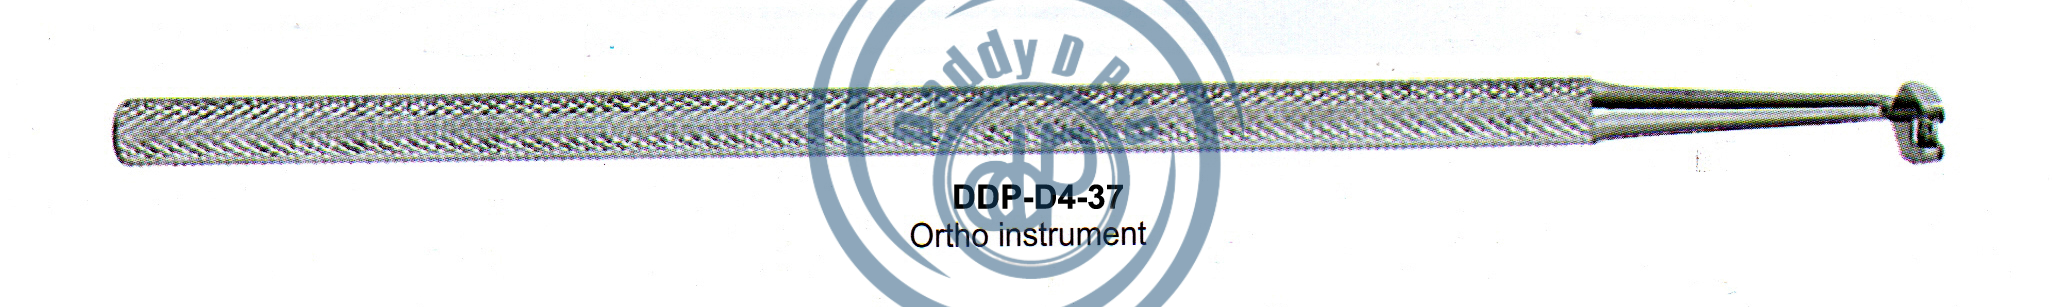 images/DDP-D4-37.png